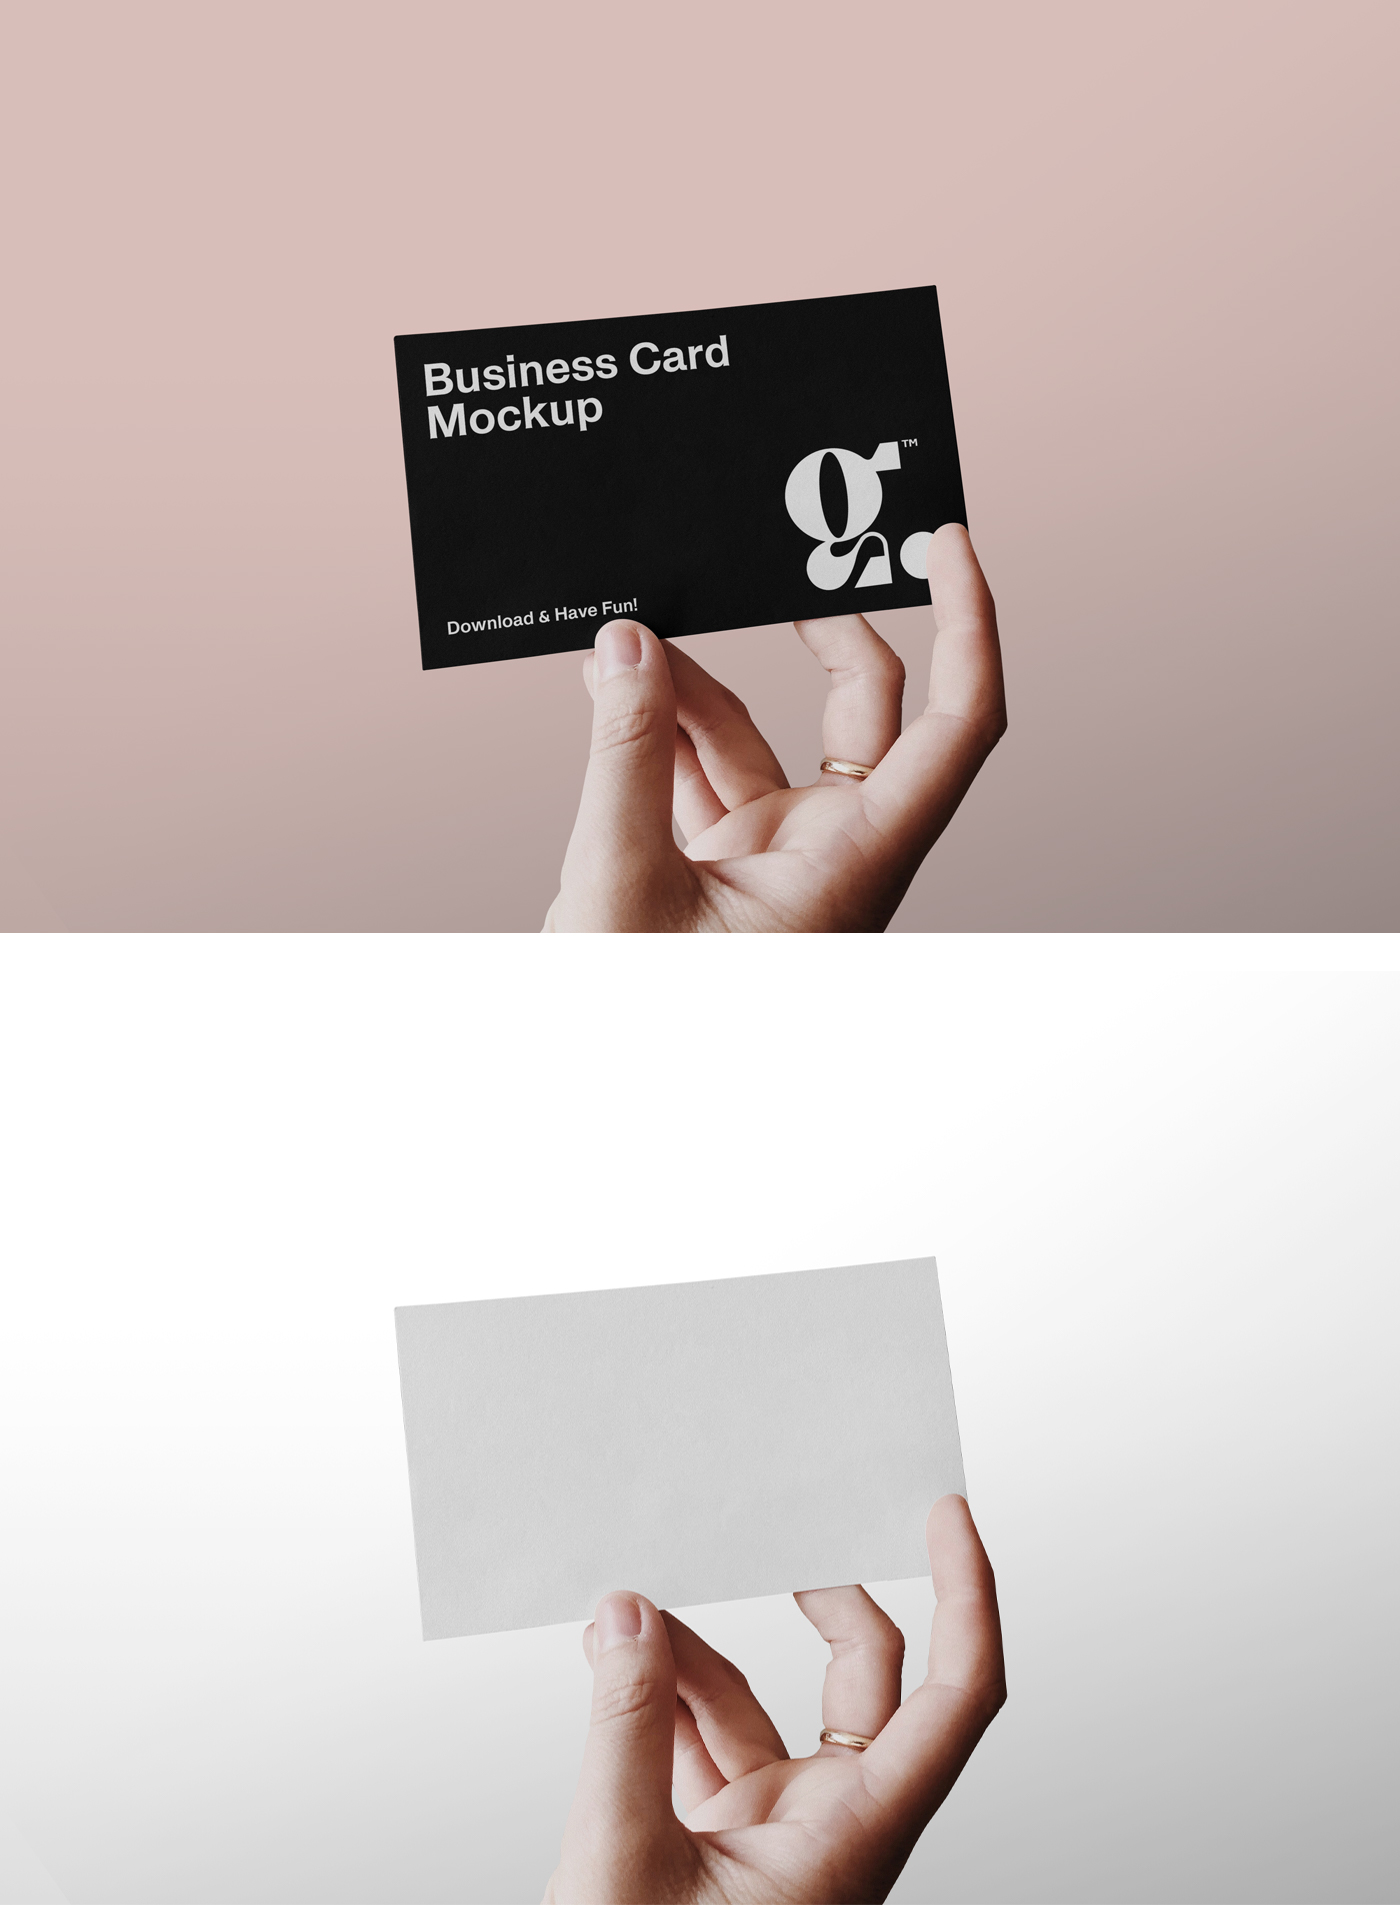 406 可商用手持卡片名片PSD样机素材Business Card with Hand Mockup  yythkg.zip